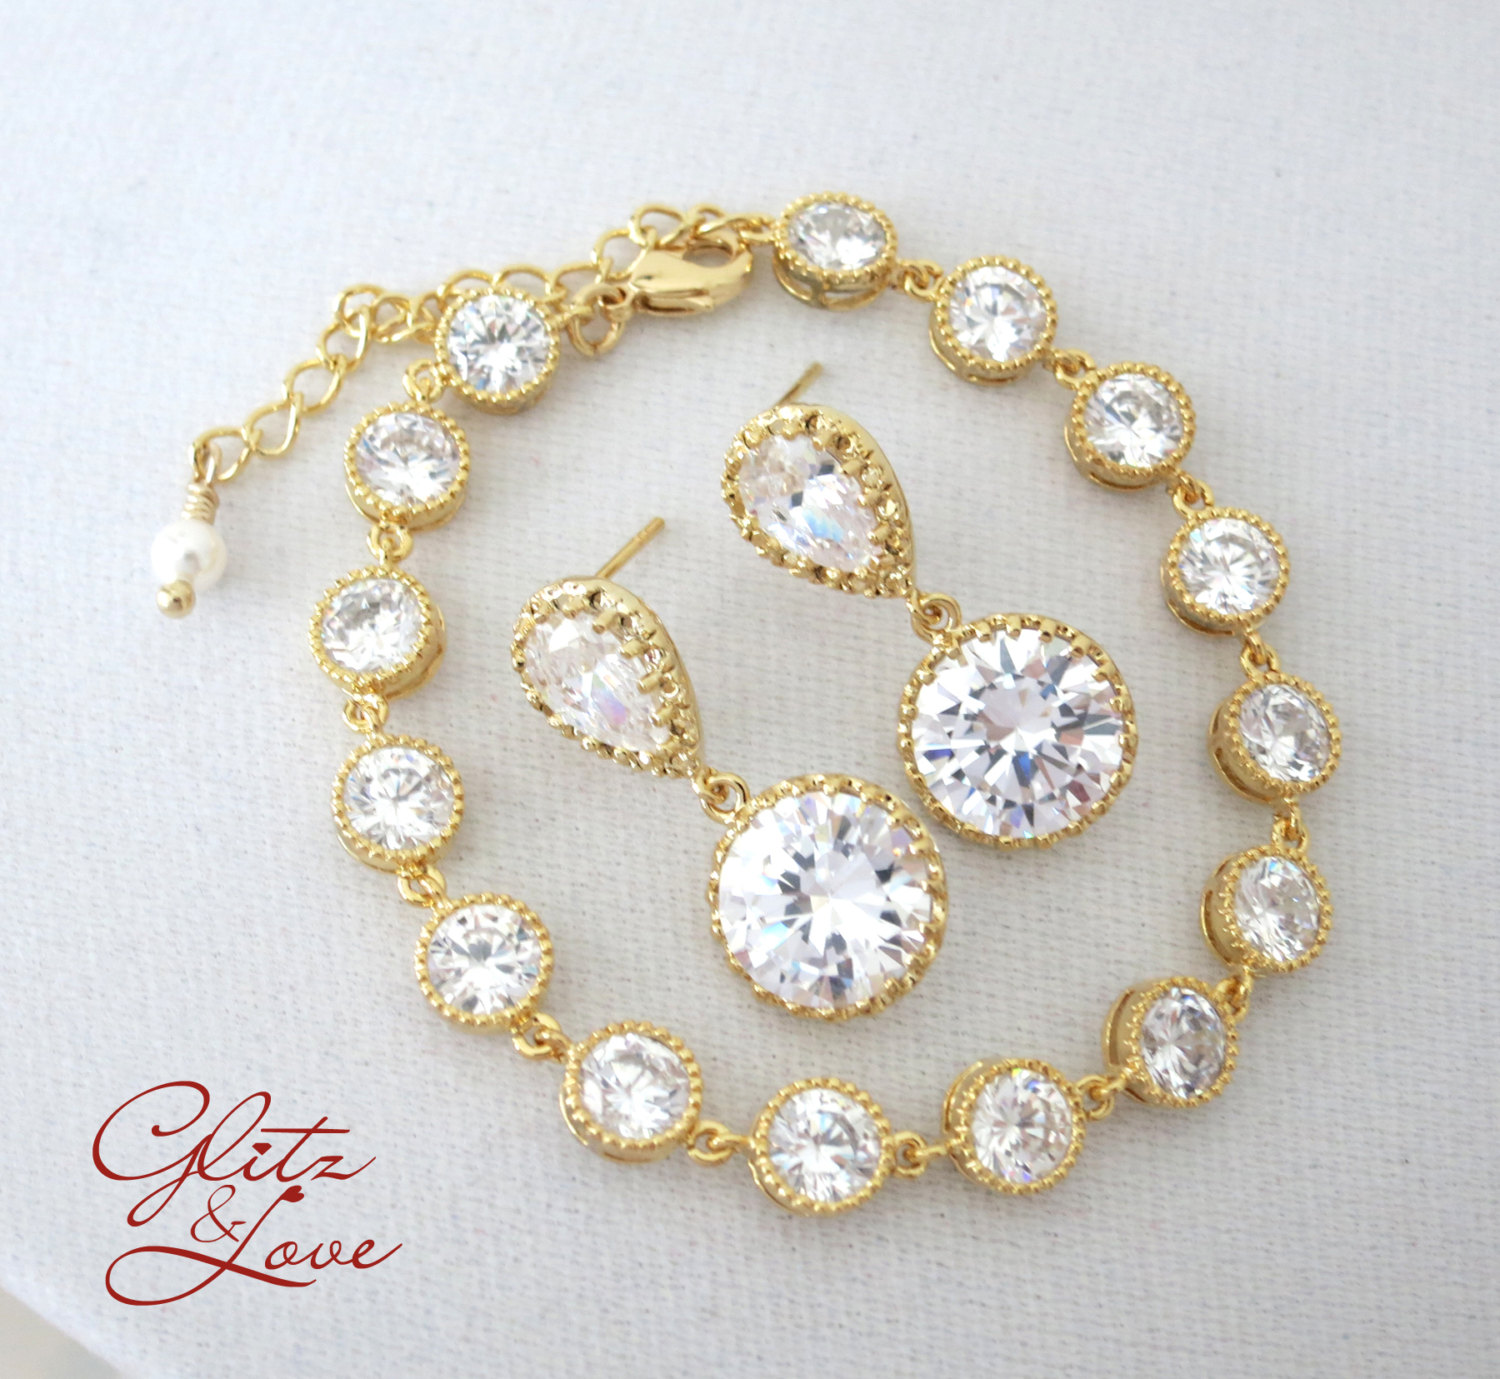 Gold Bracelet Set from Glitz & Love